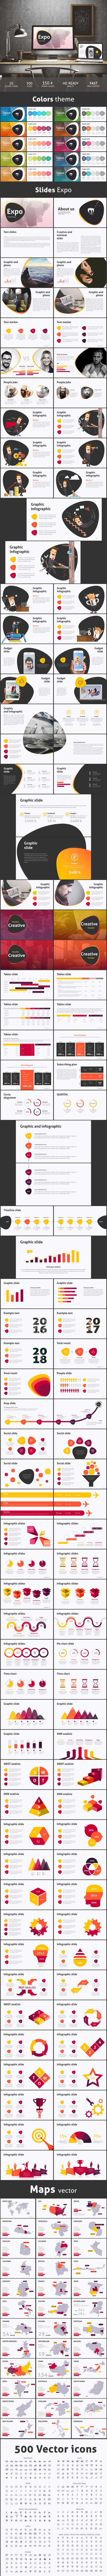 presentation slide slides Powerpoint Keynote infographic template creative